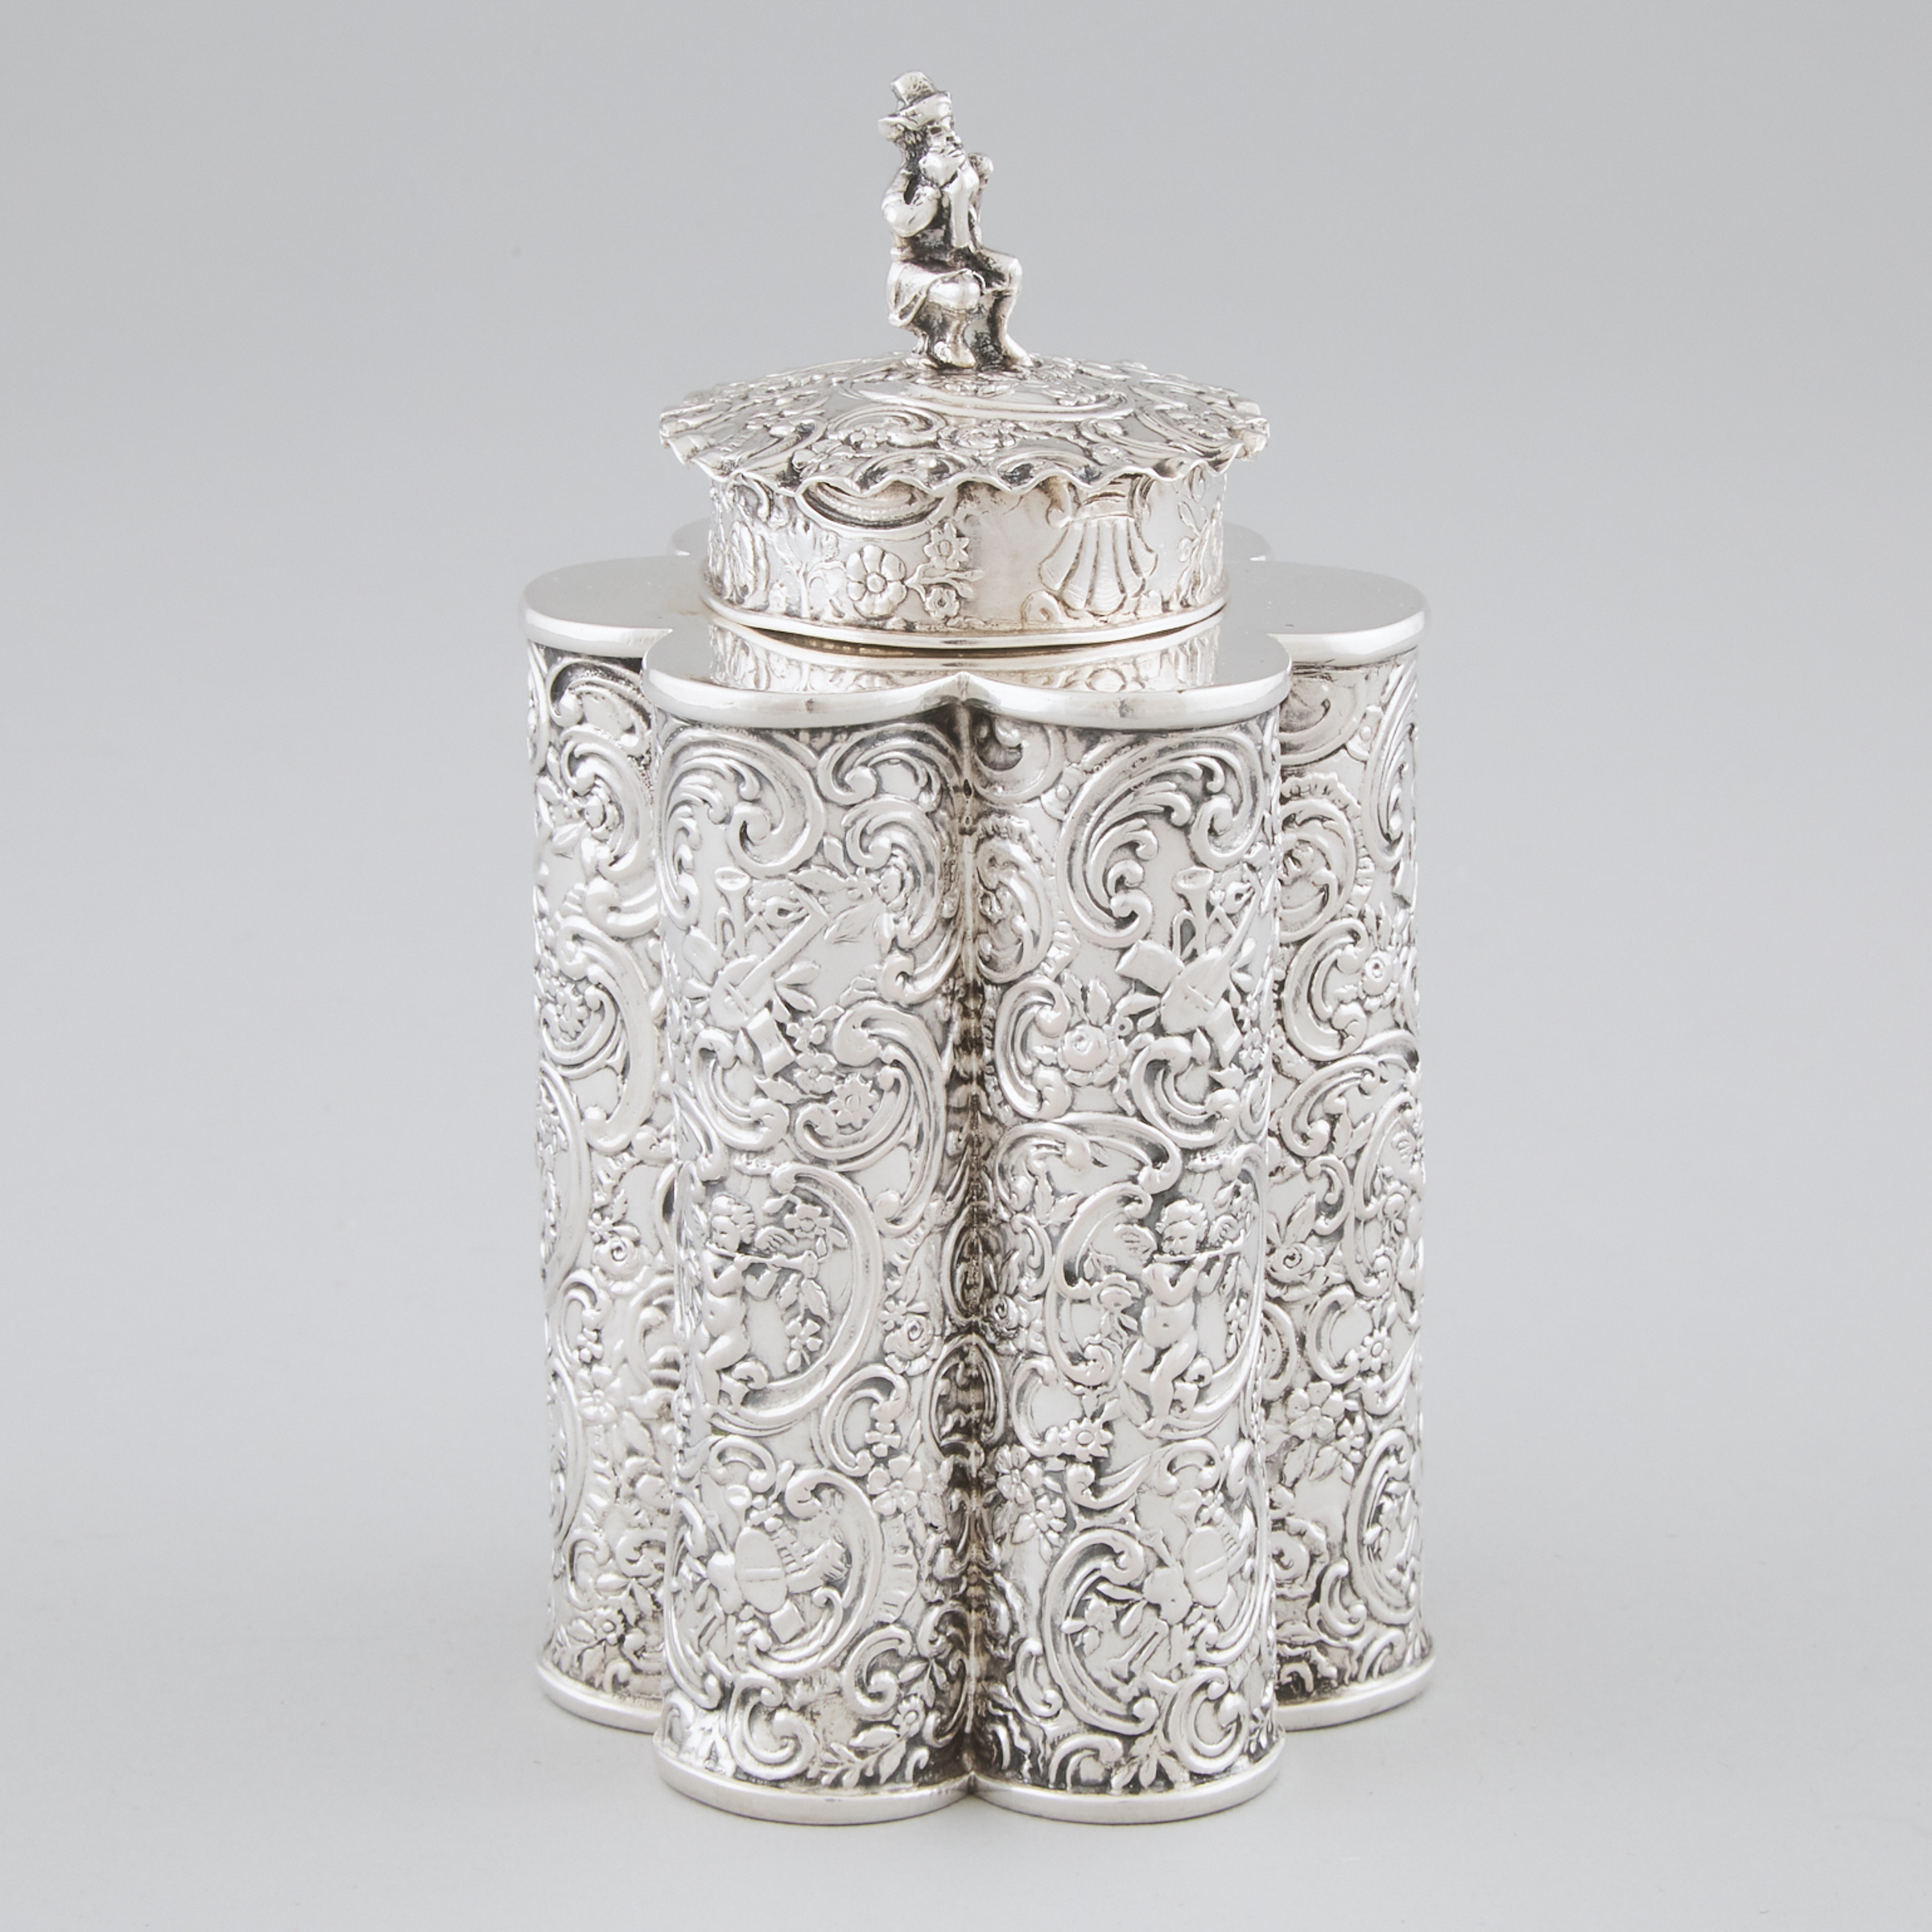 German Silver Repoussé Tea Caddy, Storck & Sinsheimer, Hanau, c.1900